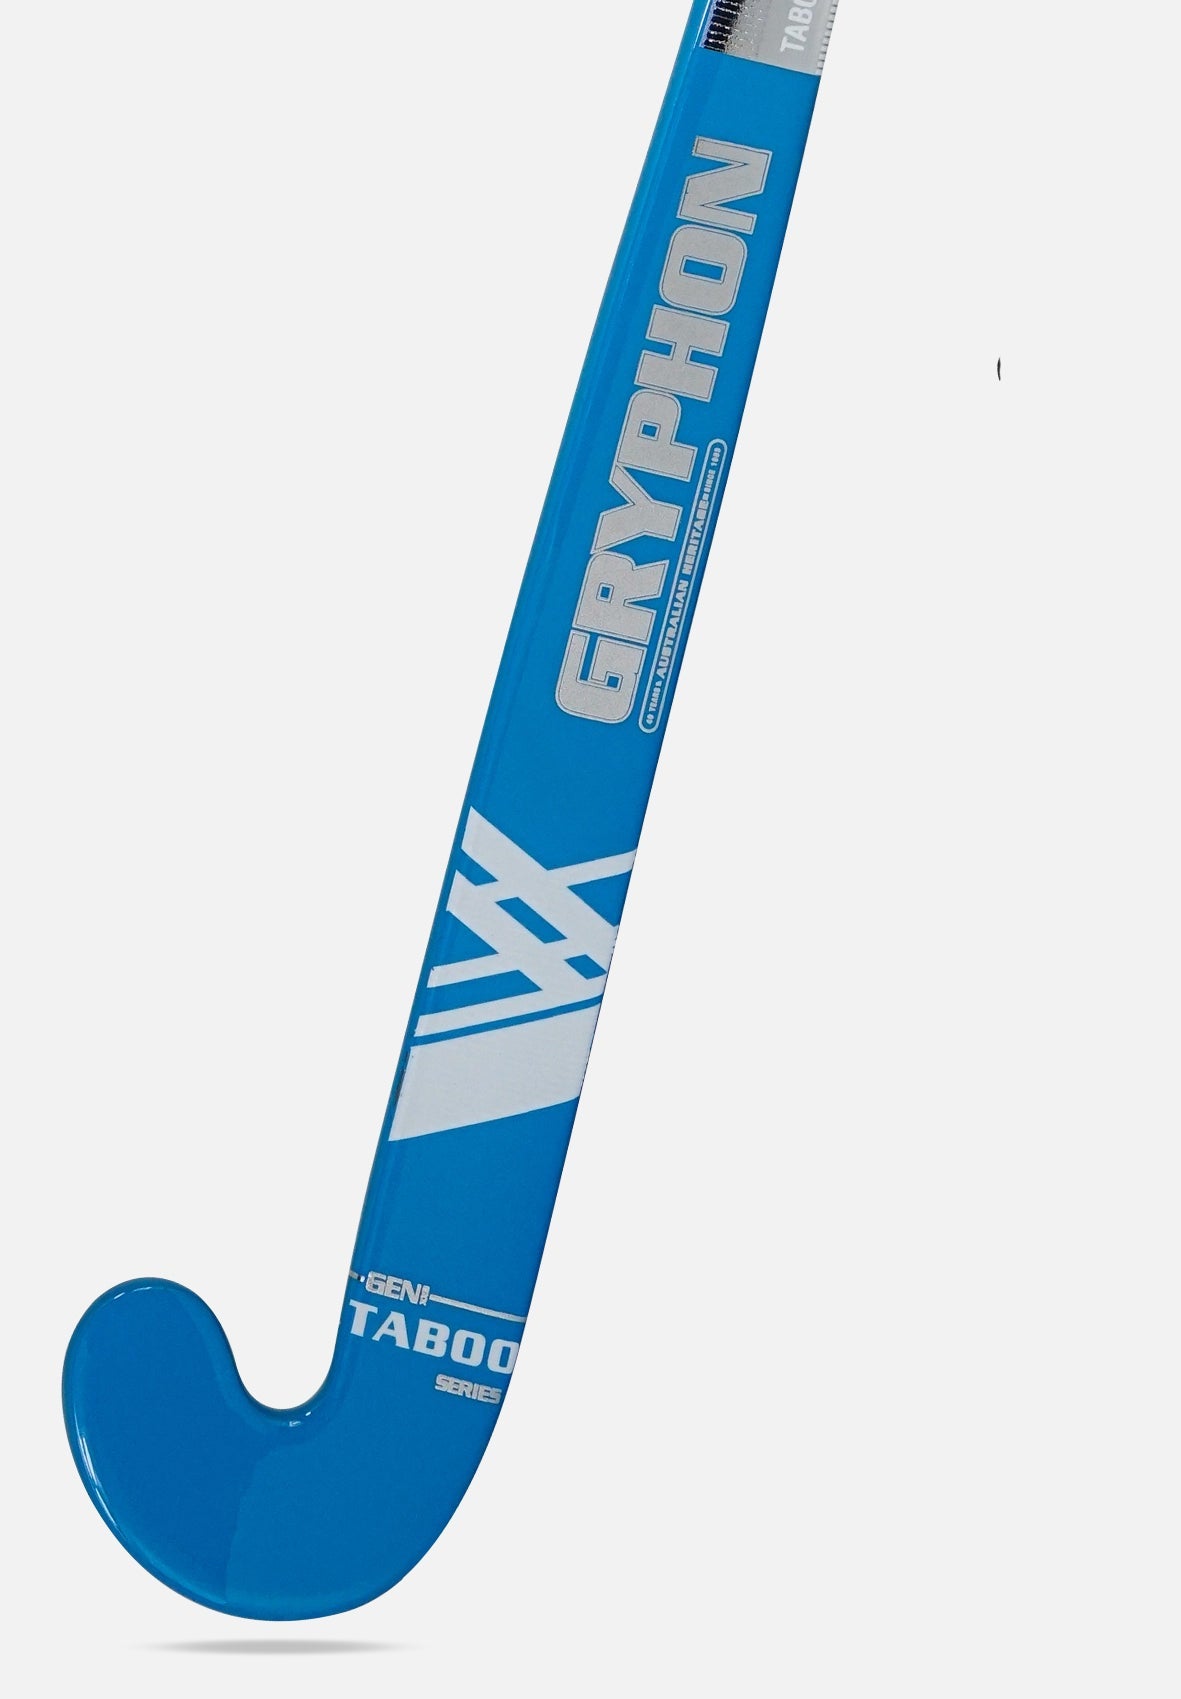 Gryphon Gen XX3 Taboo Junior (Pro-J) - Elite Hockey - Field Hockey Shop Australia